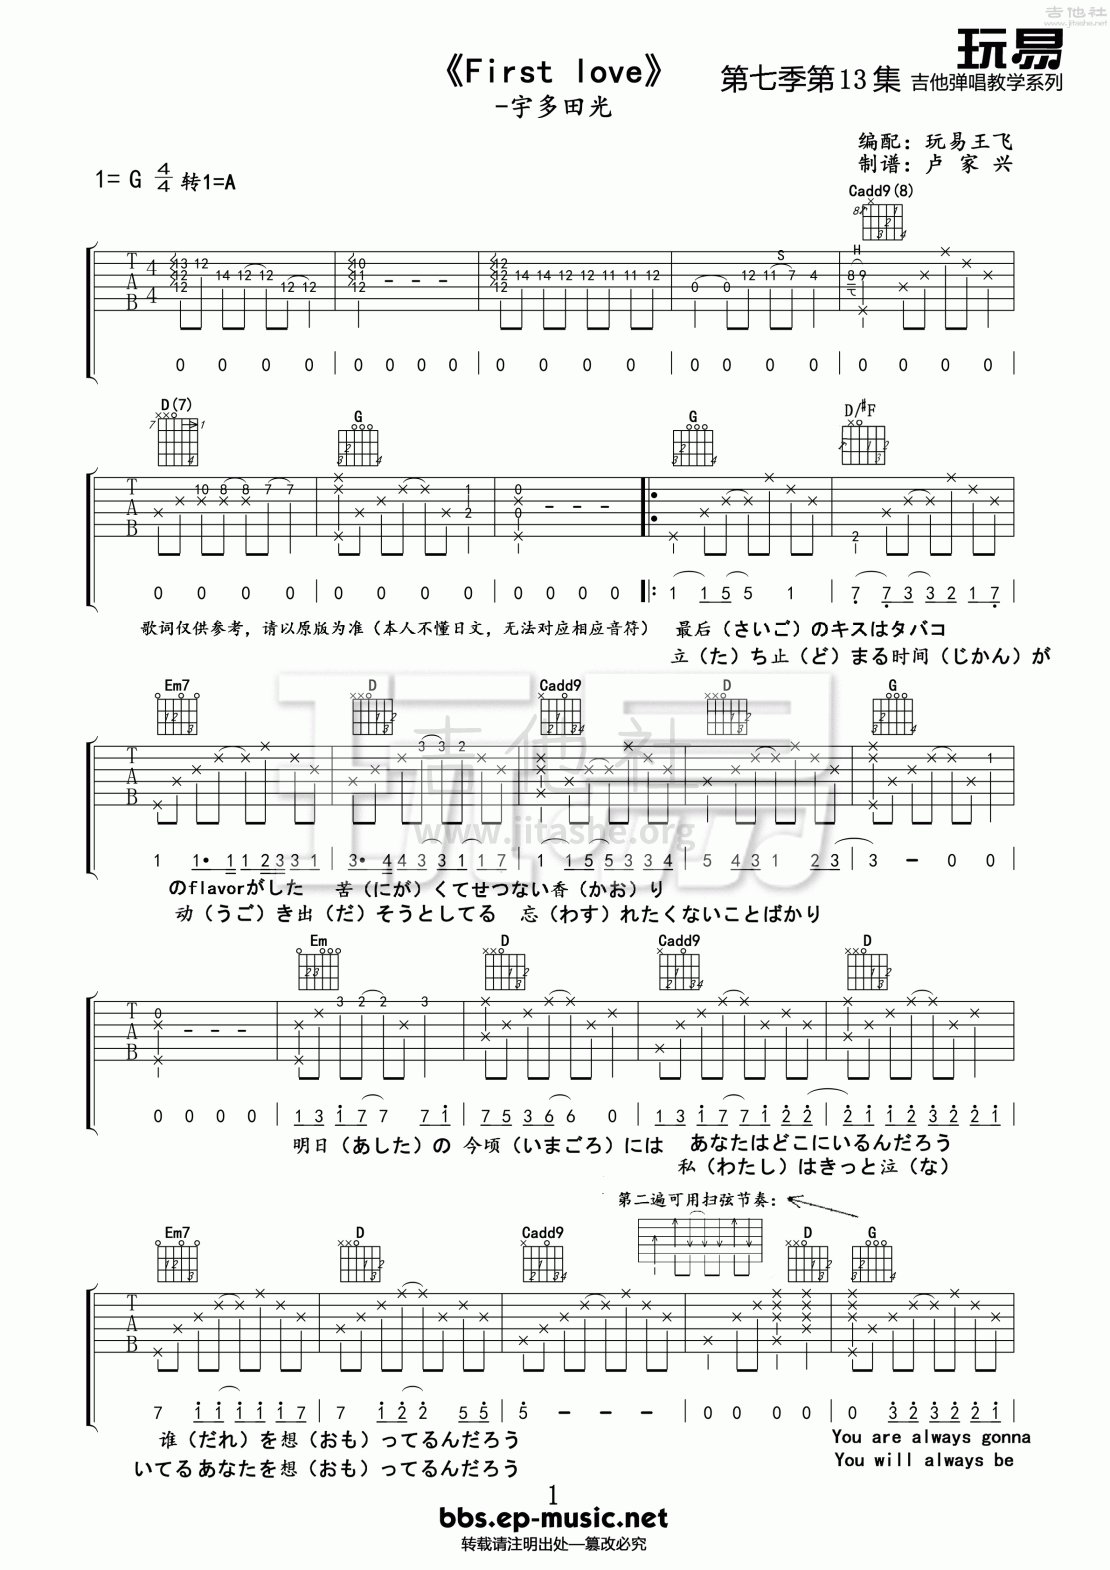 whistle吉他谱原版,stle吉他六线,stle吉他简(第2页)_大山谷图库